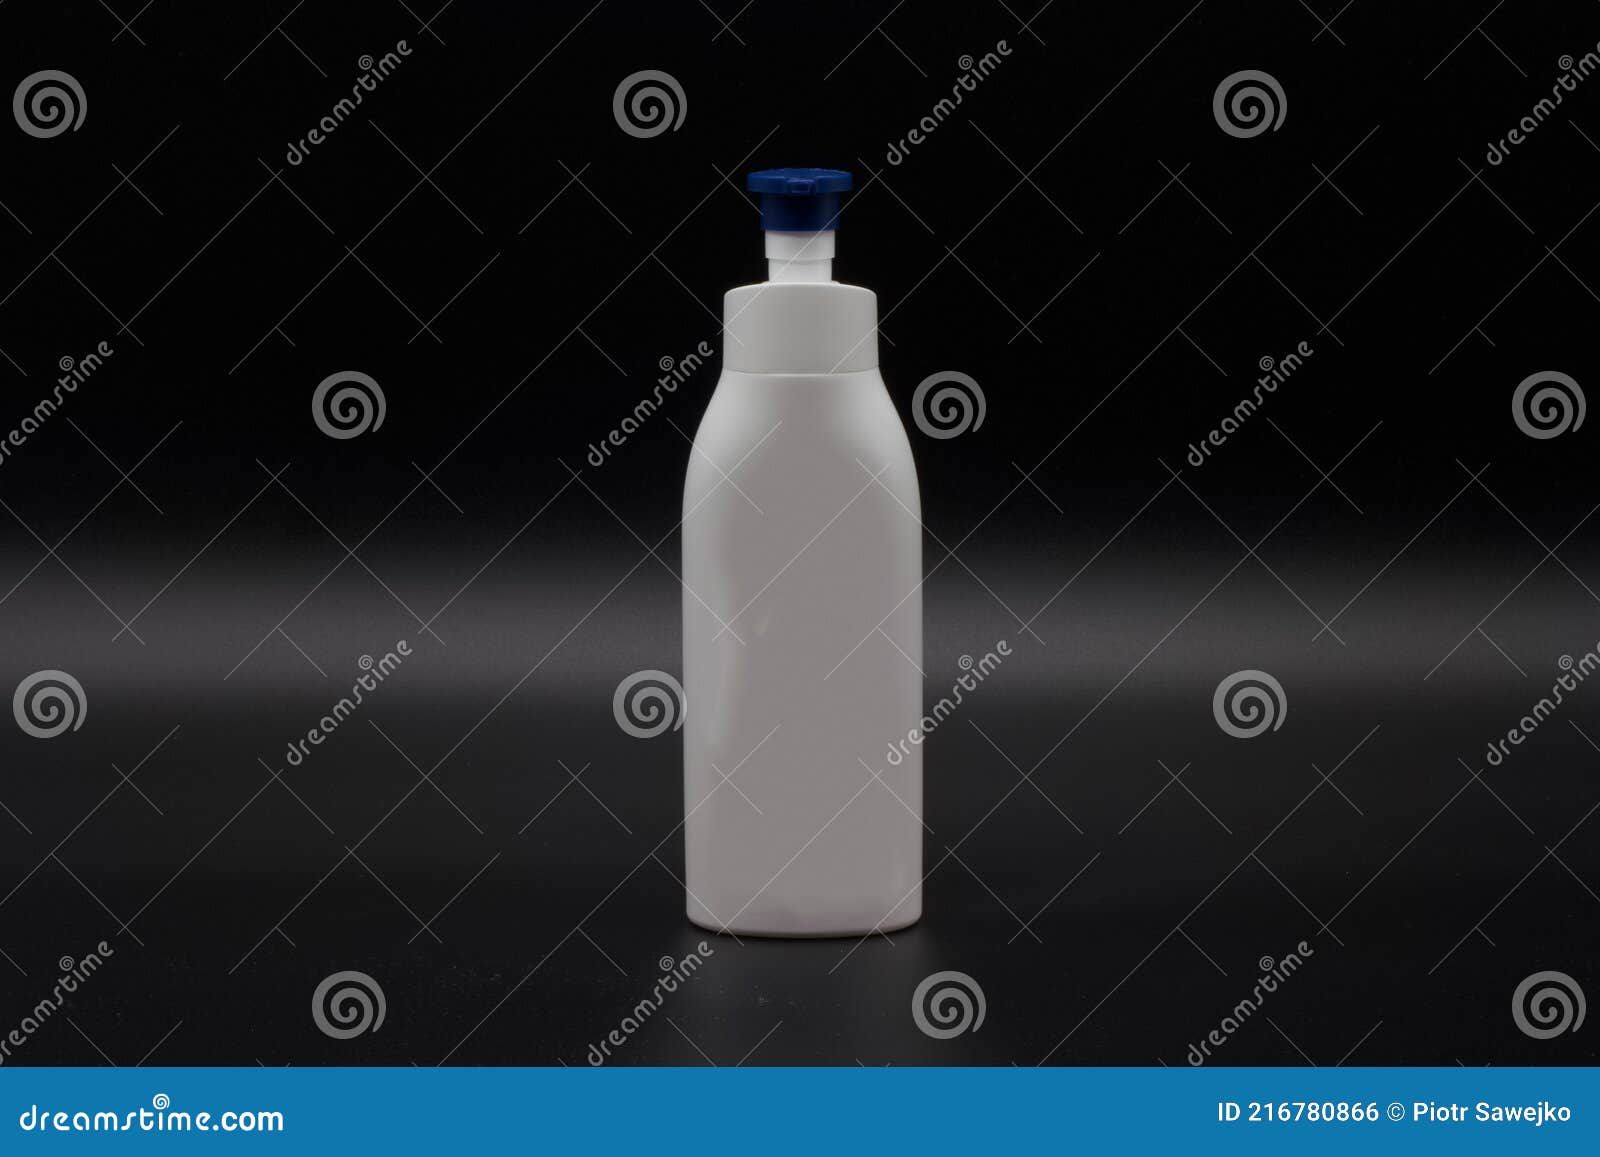 bottle white cap blue liquid